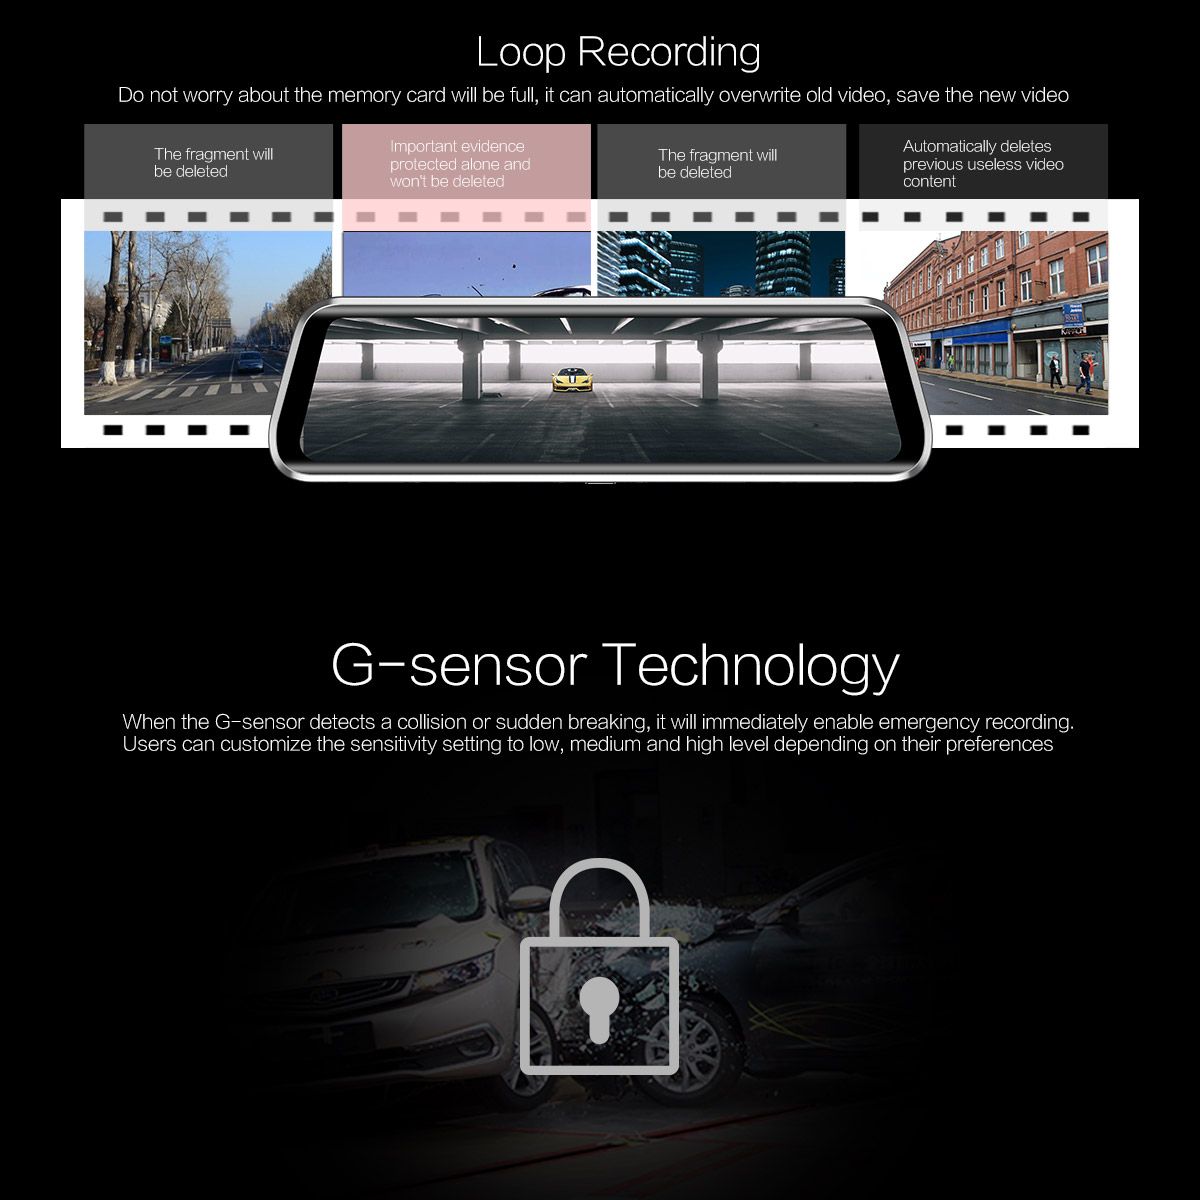 Anytek-T900-1080P-Front-And-Rear-Mirror-Recorder-Car-Rear-View-Camera-1424197